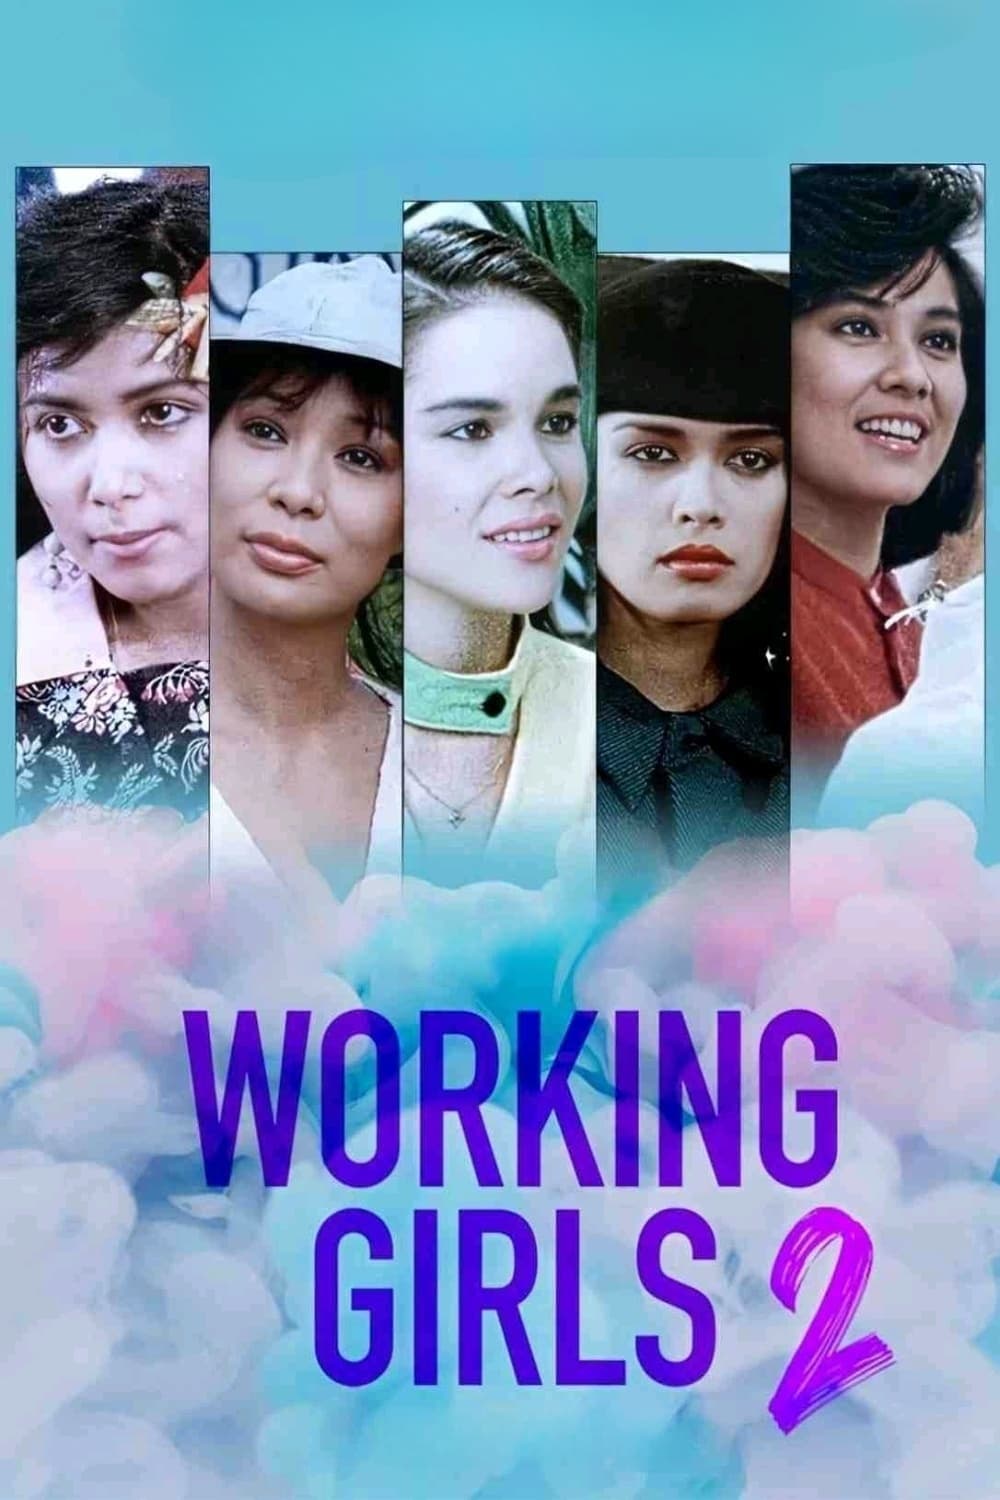 Working Girls 2 (1987)